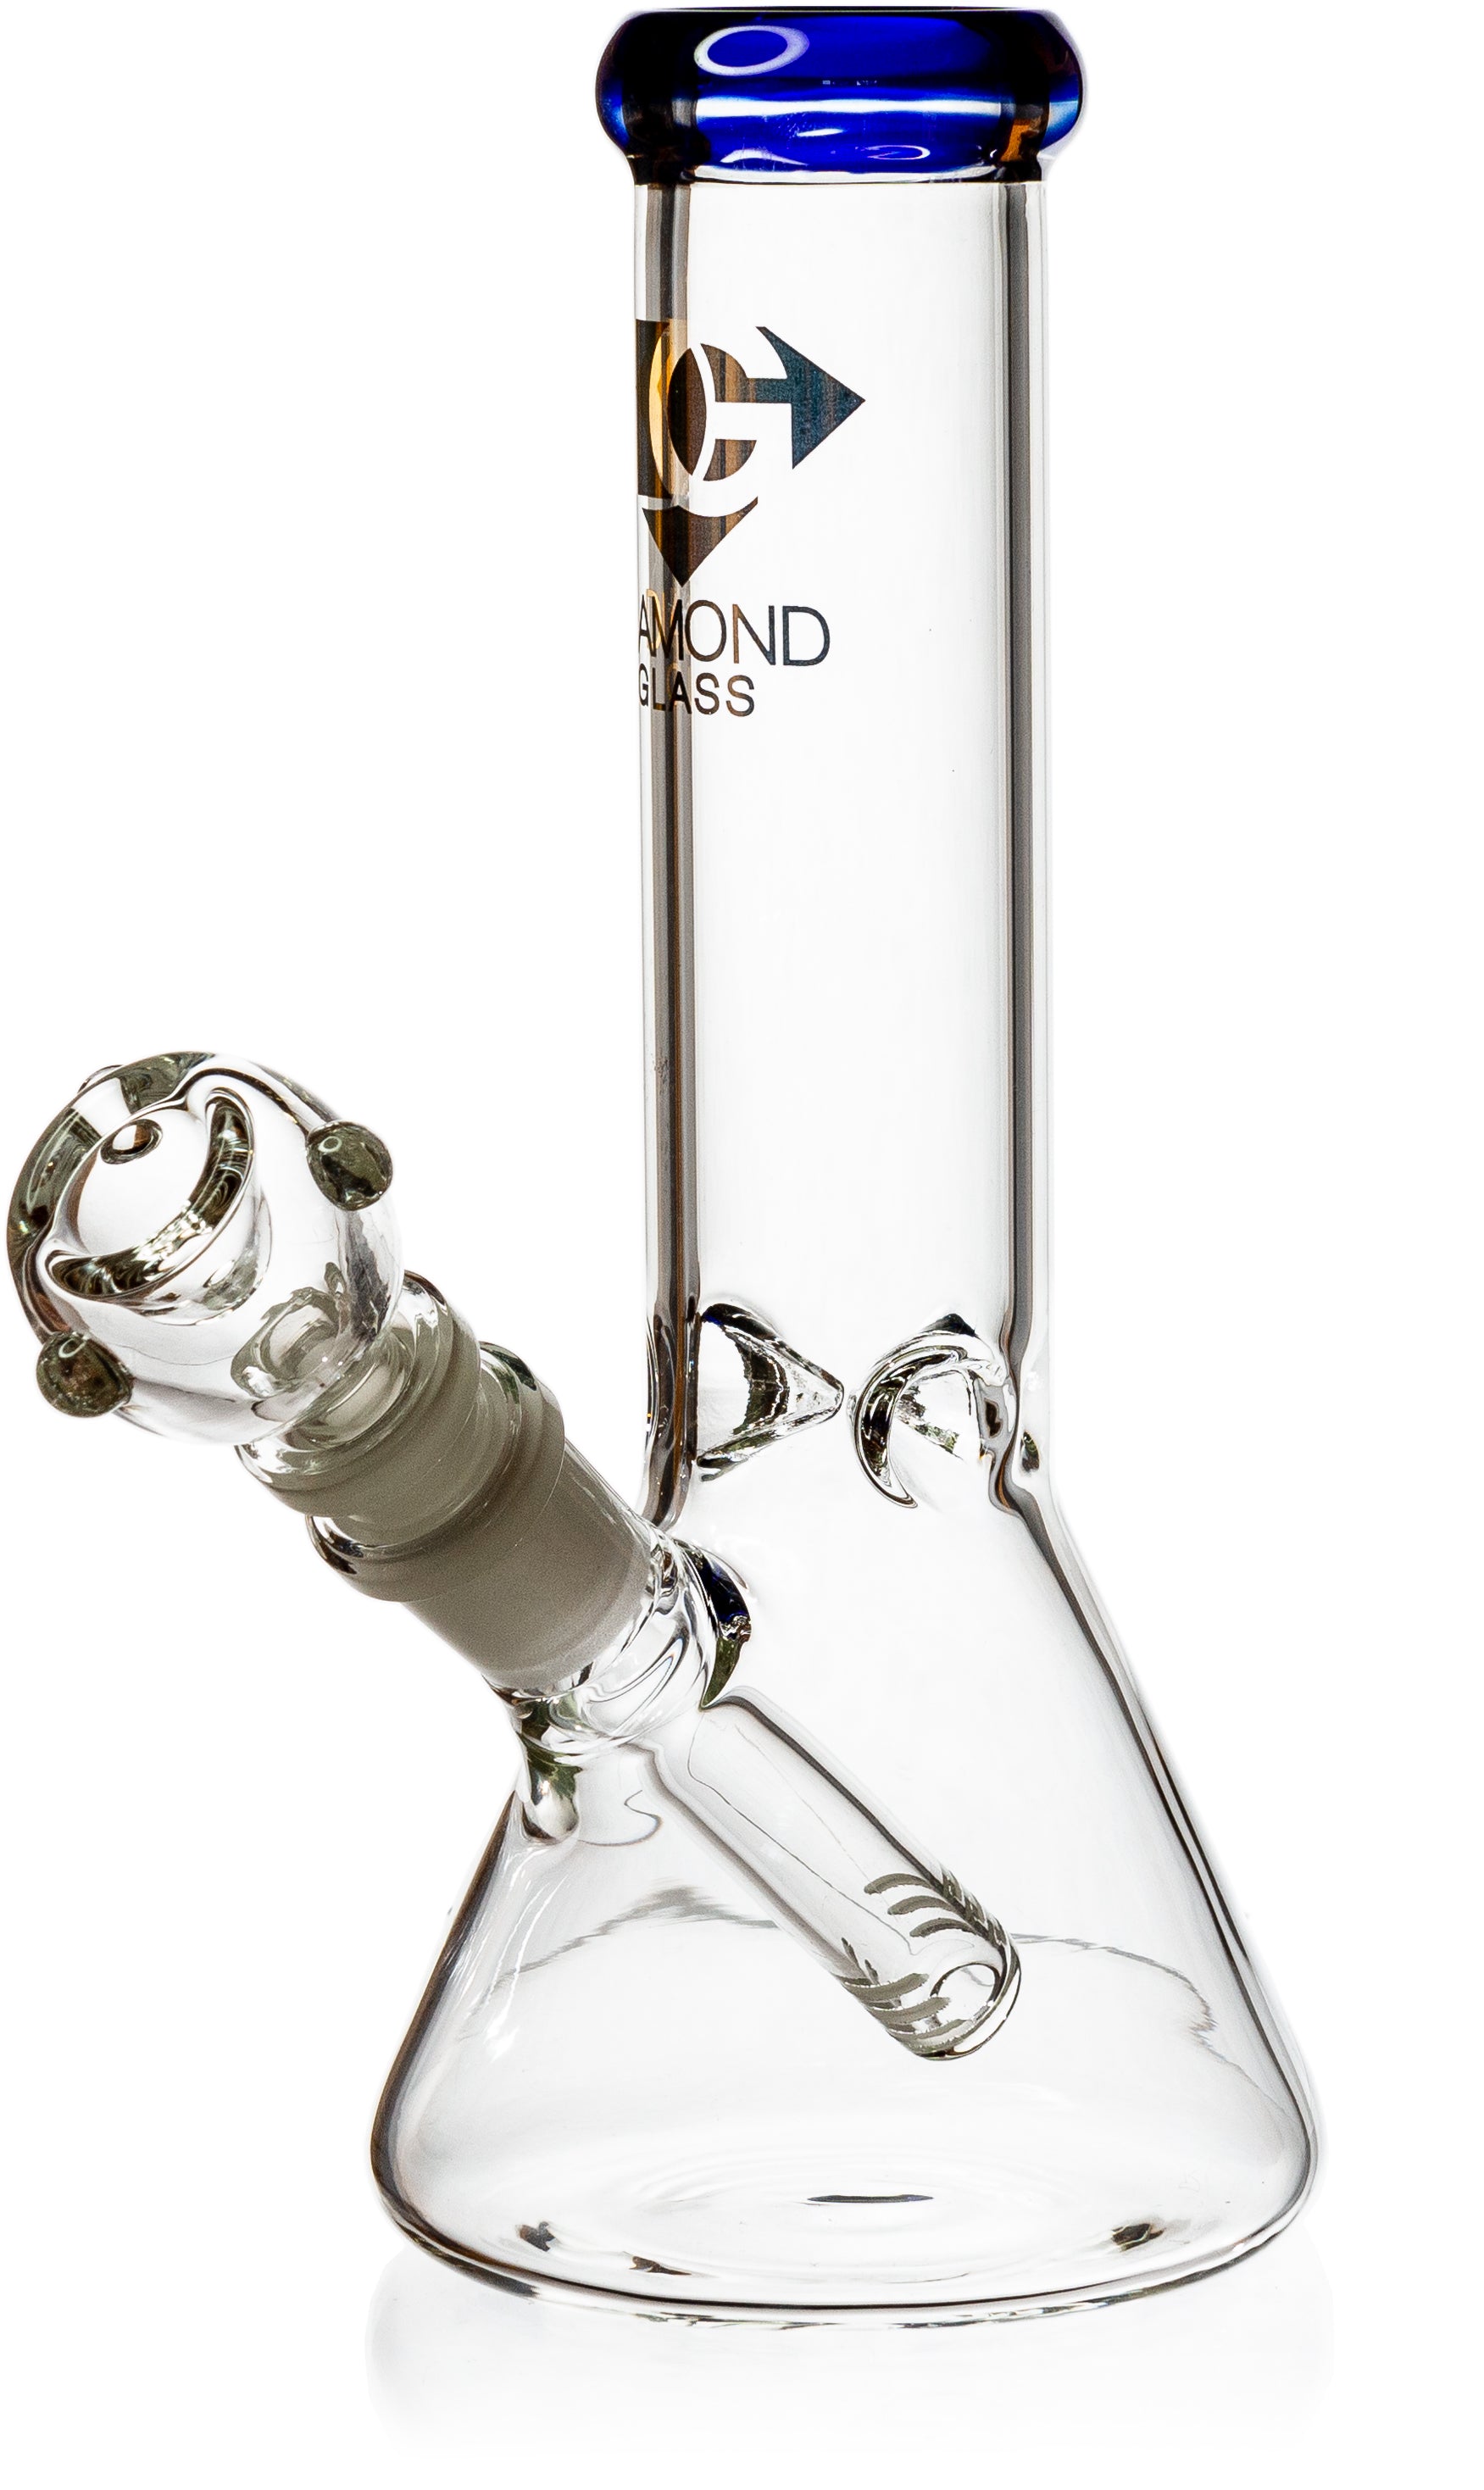 Diamond Glass 8 Classic Beaker Bong - Smoke Cartel